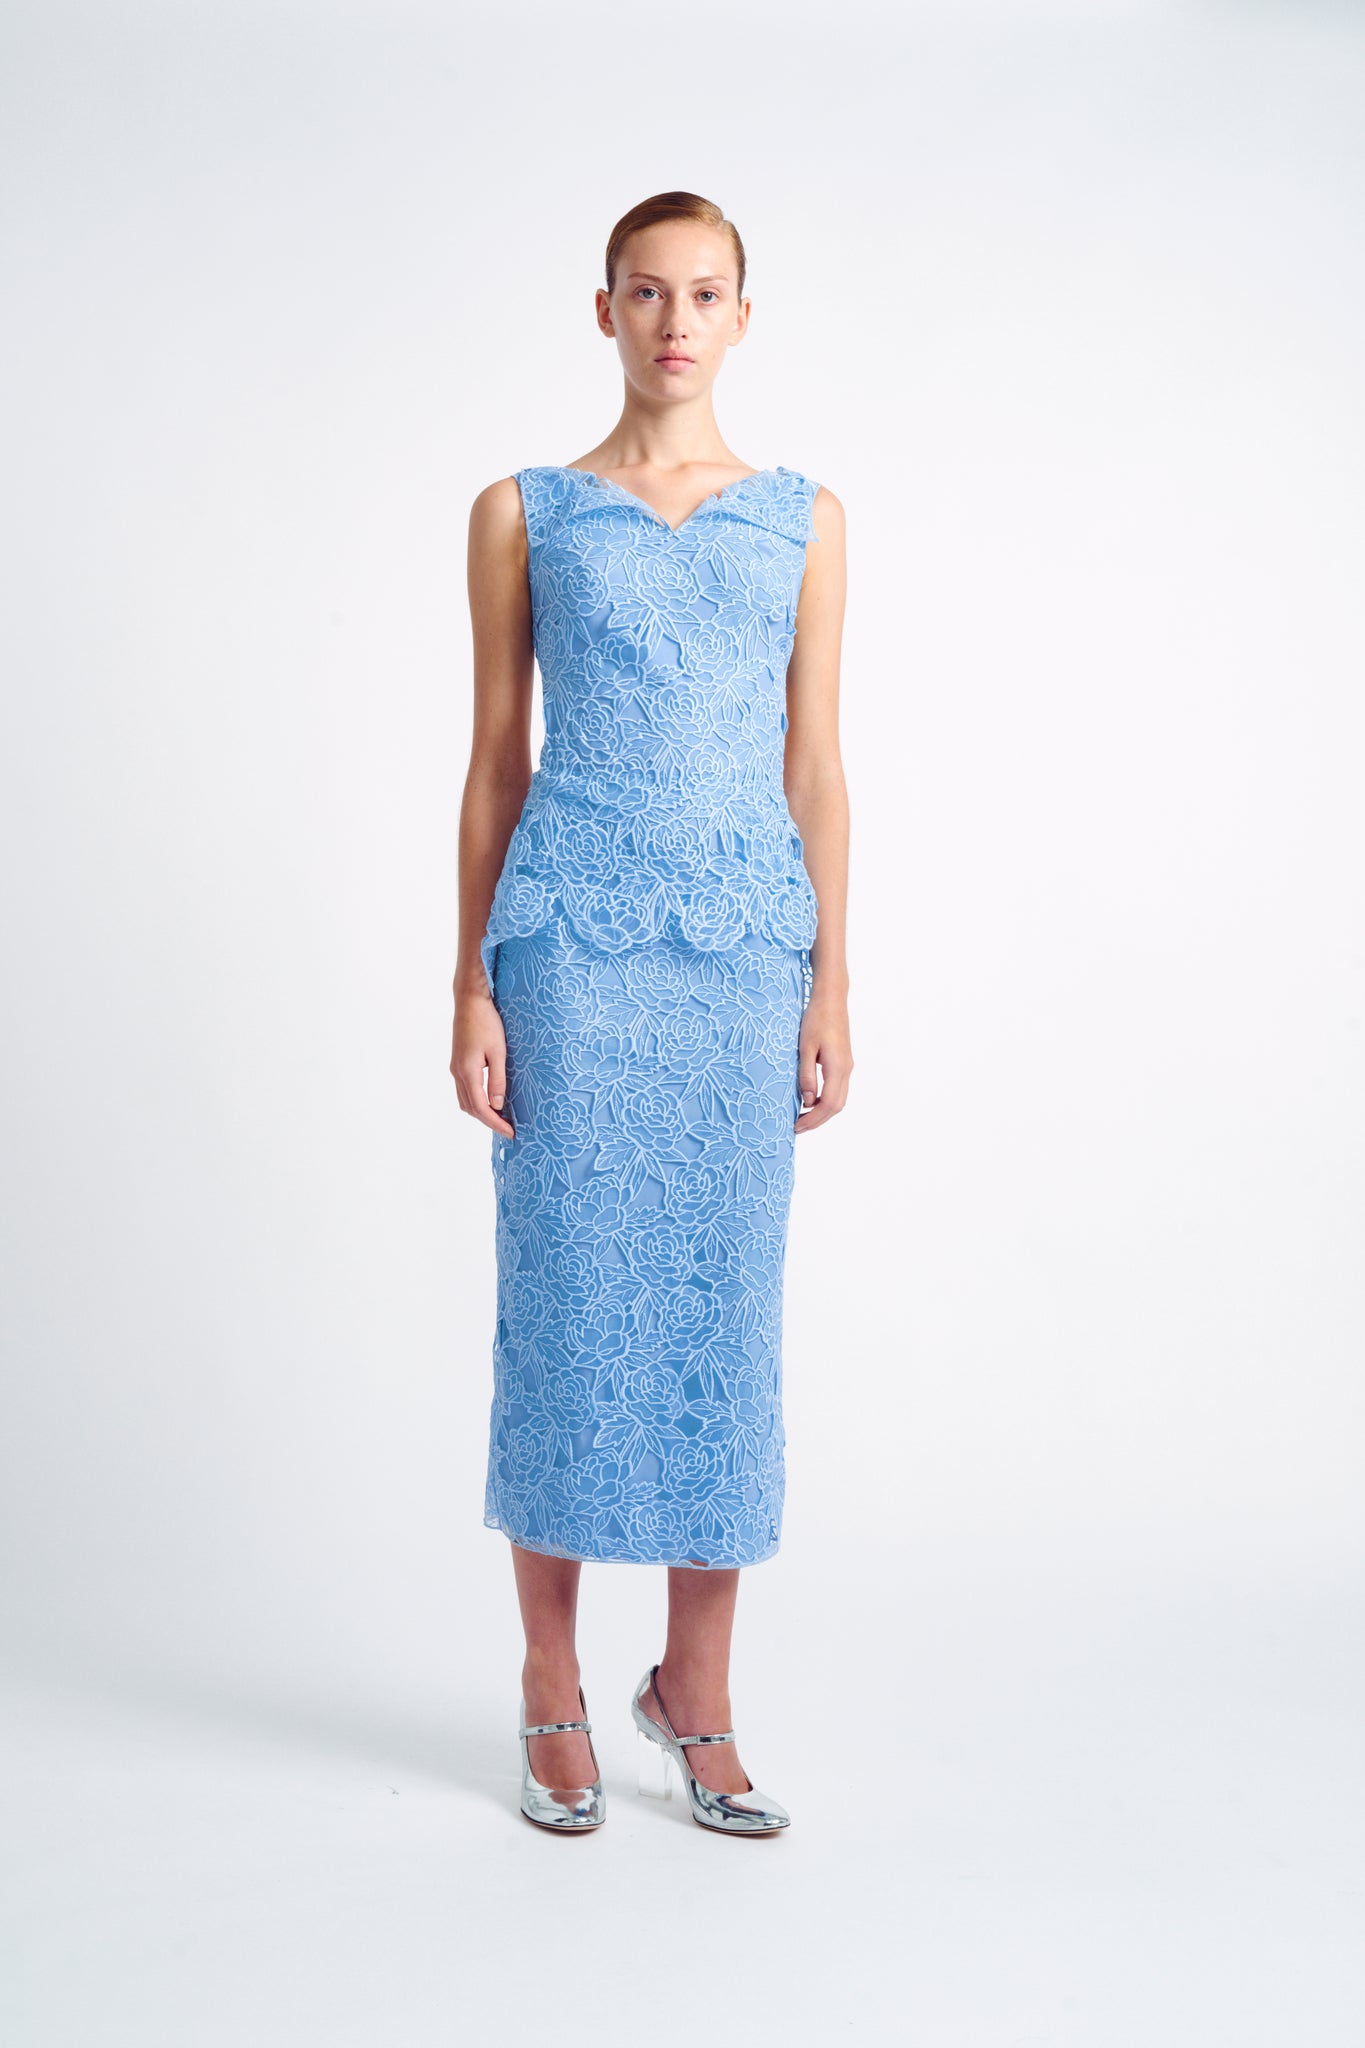 Maesa Dress | Baby Blue Lace Dress with Peplum | Emilia Wickstead